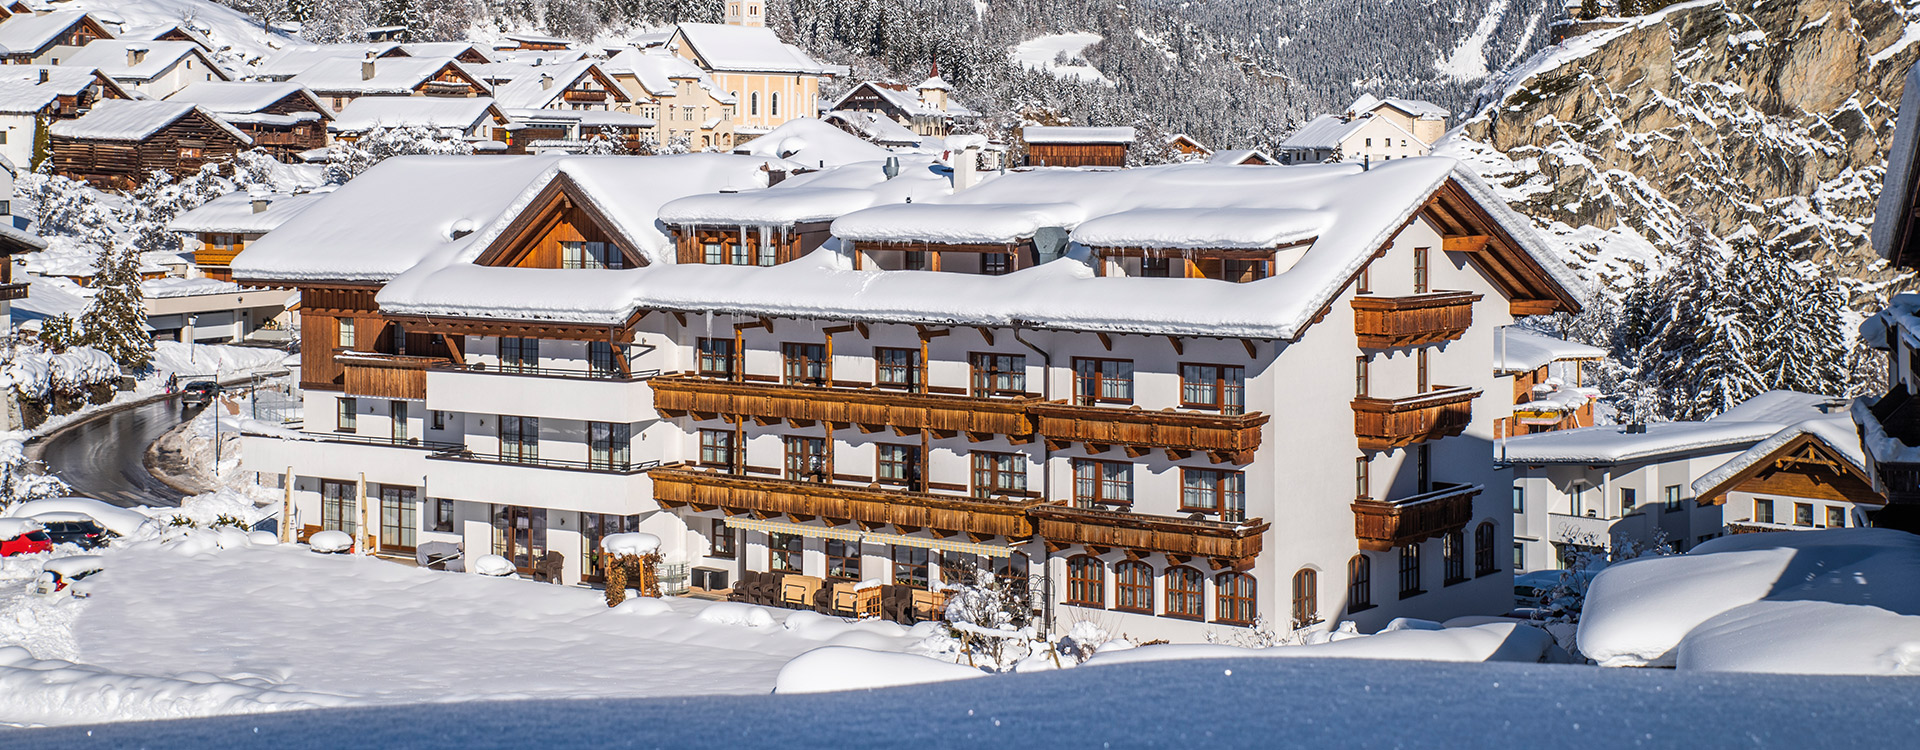 Hotel Puint Wellnesshotel Naturhotel Serfaus Fiss Ladis Tirol Winter 1920x750 05